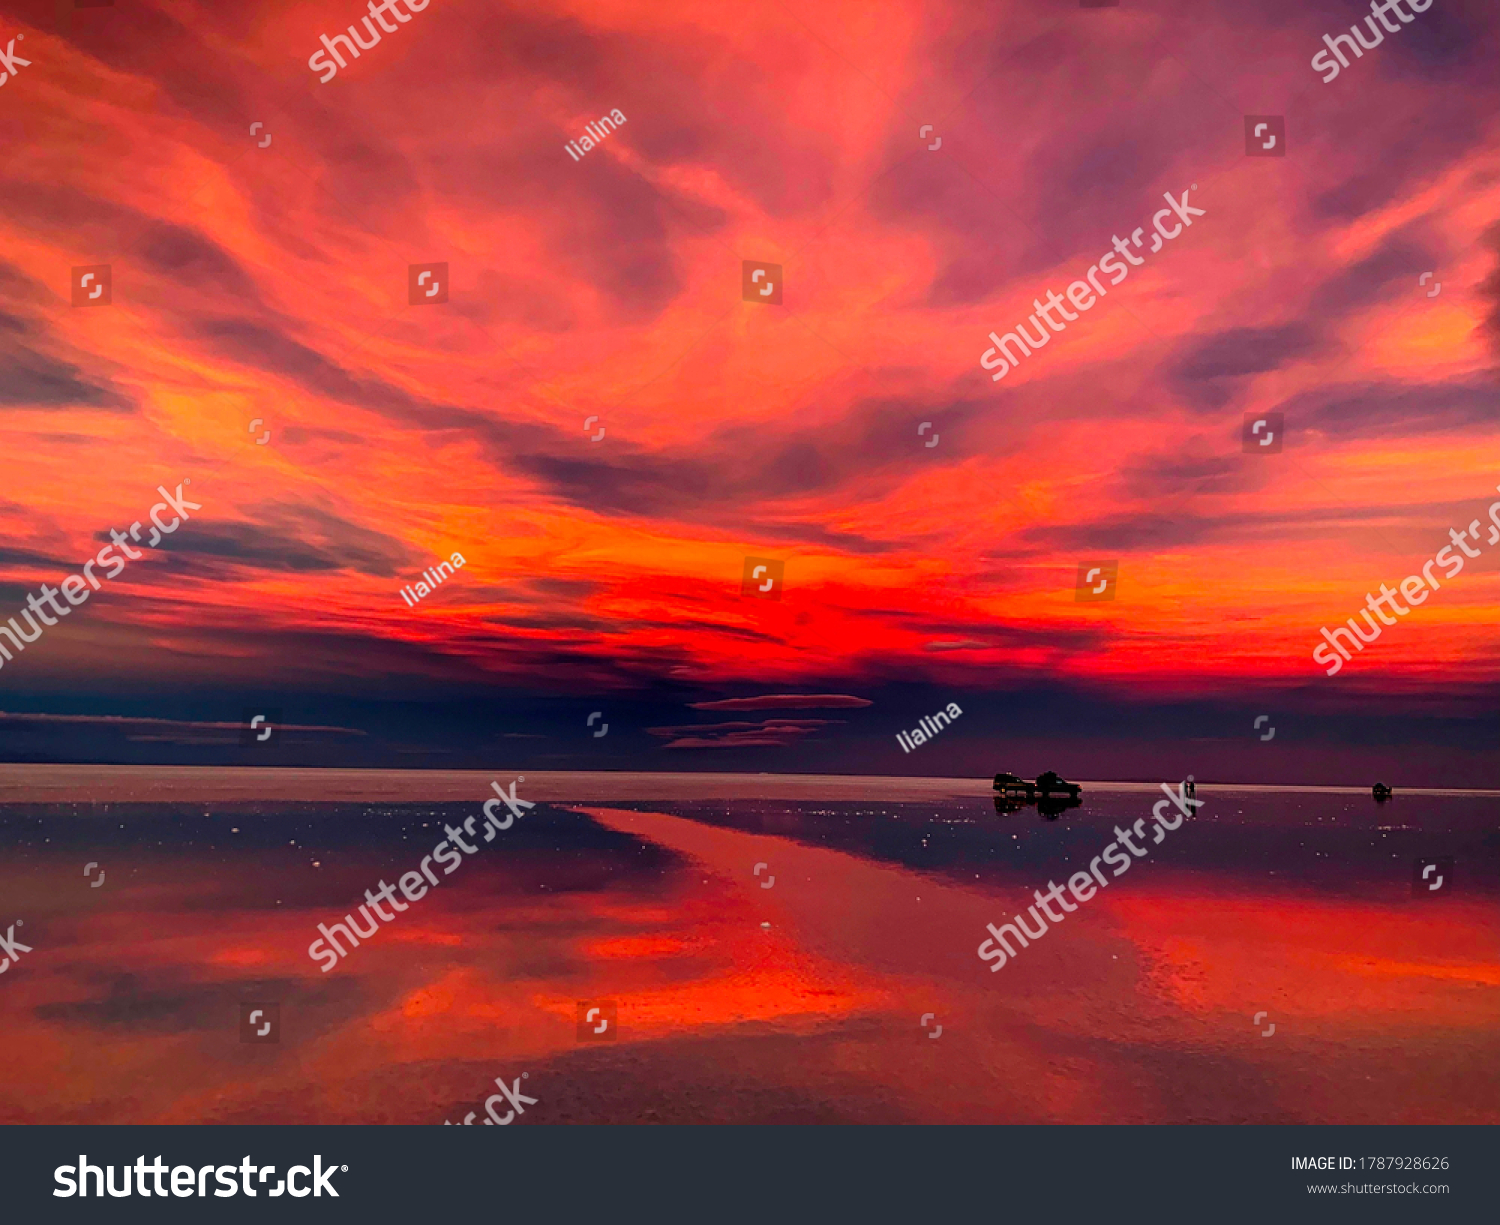 Fiery red purple sunset over salt marsh in Salar de Uyuni,Bolivia. Stunning sunset sky.The Mars-like landscape of the world's largest salt flat. Surreal beautiful view evening playa Tunupa. Reflection #1787928626